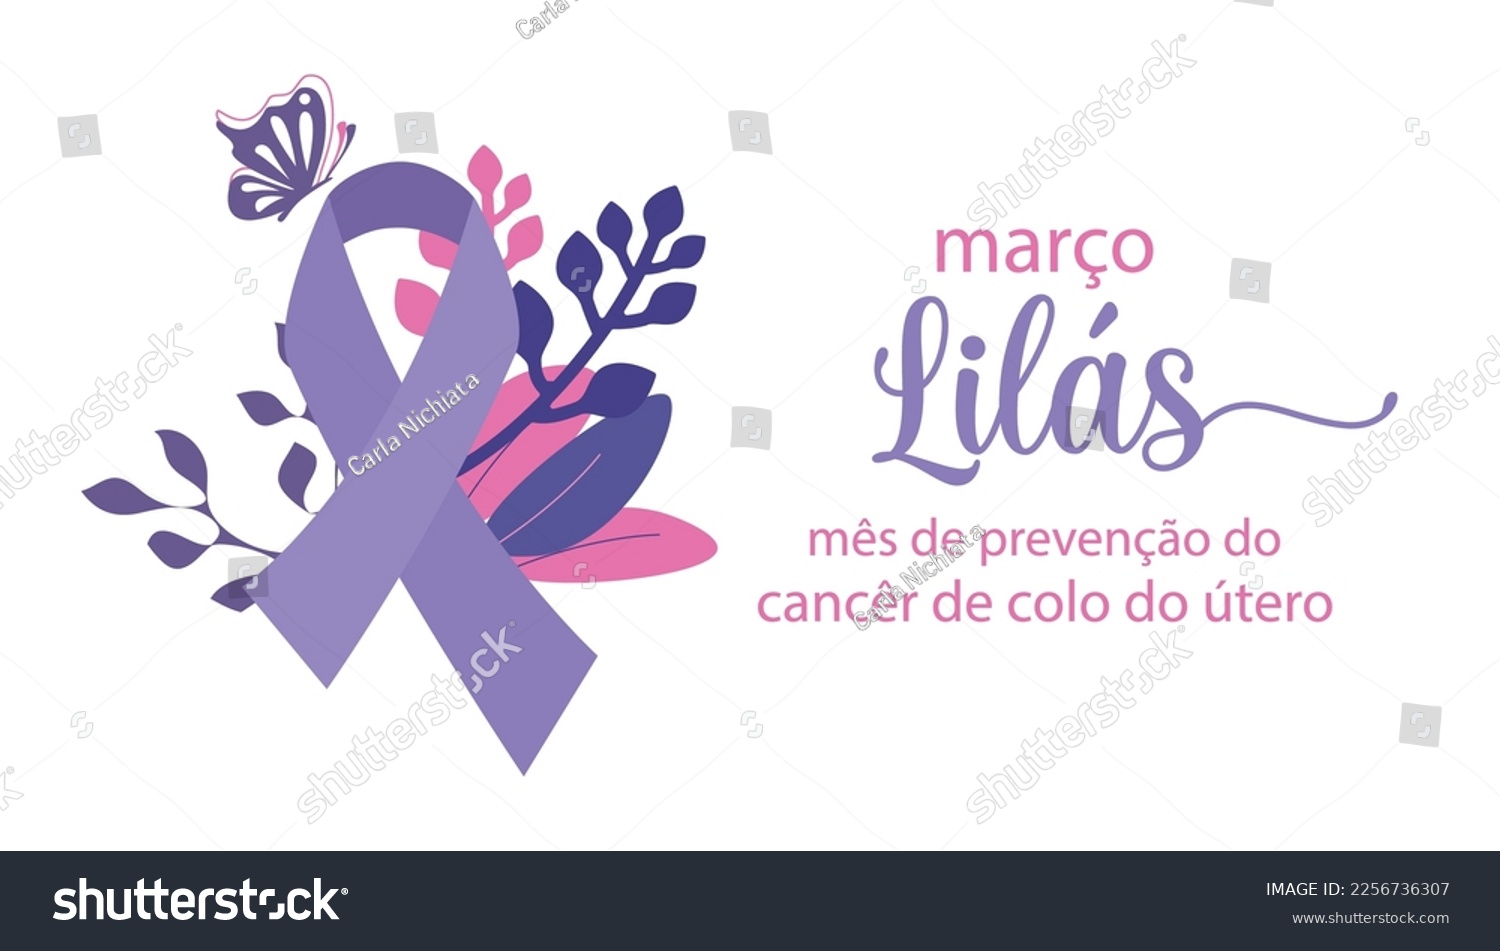 SVG of Lilac March cervical cancer prevention month in Portuguese language vector illustration. svg